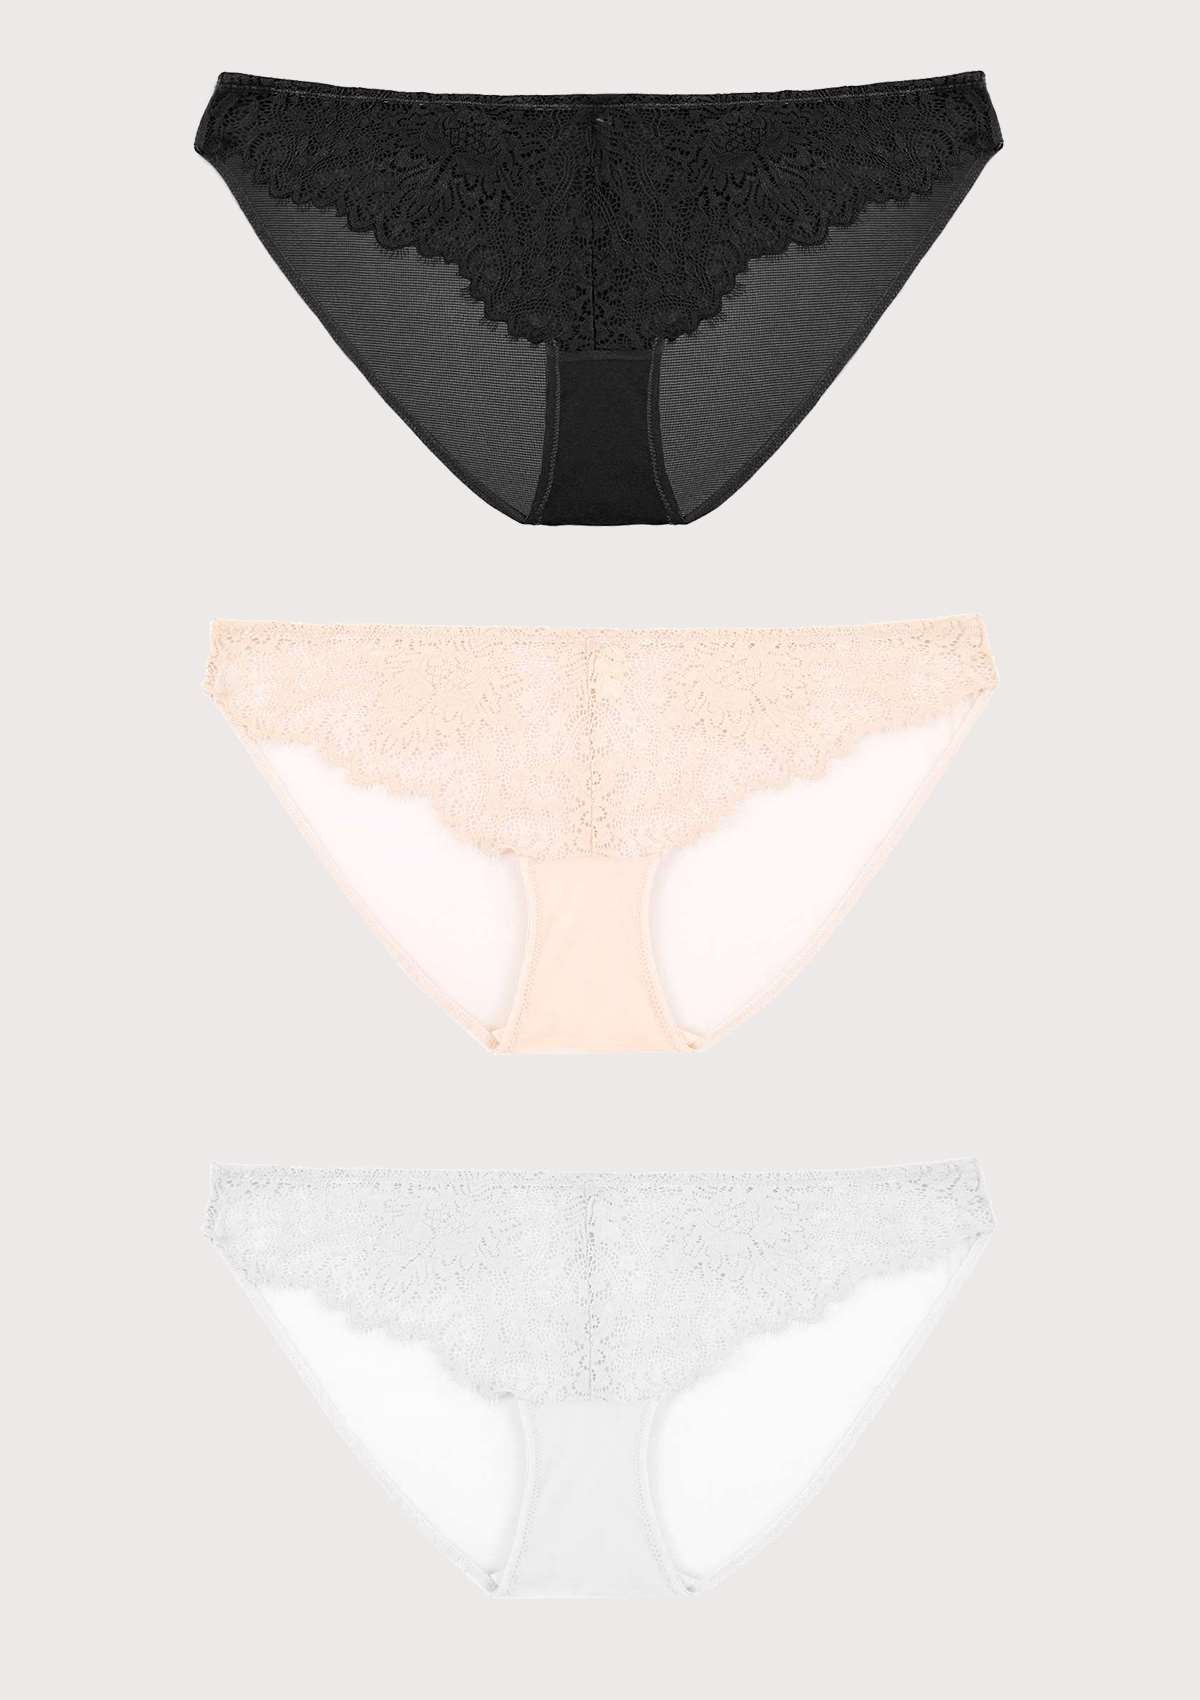 HSIA Sunflower Exquisite Lighweight Soft Lace Bikini Panties 3 Pack - S / Black+Horizon Blue+Pink